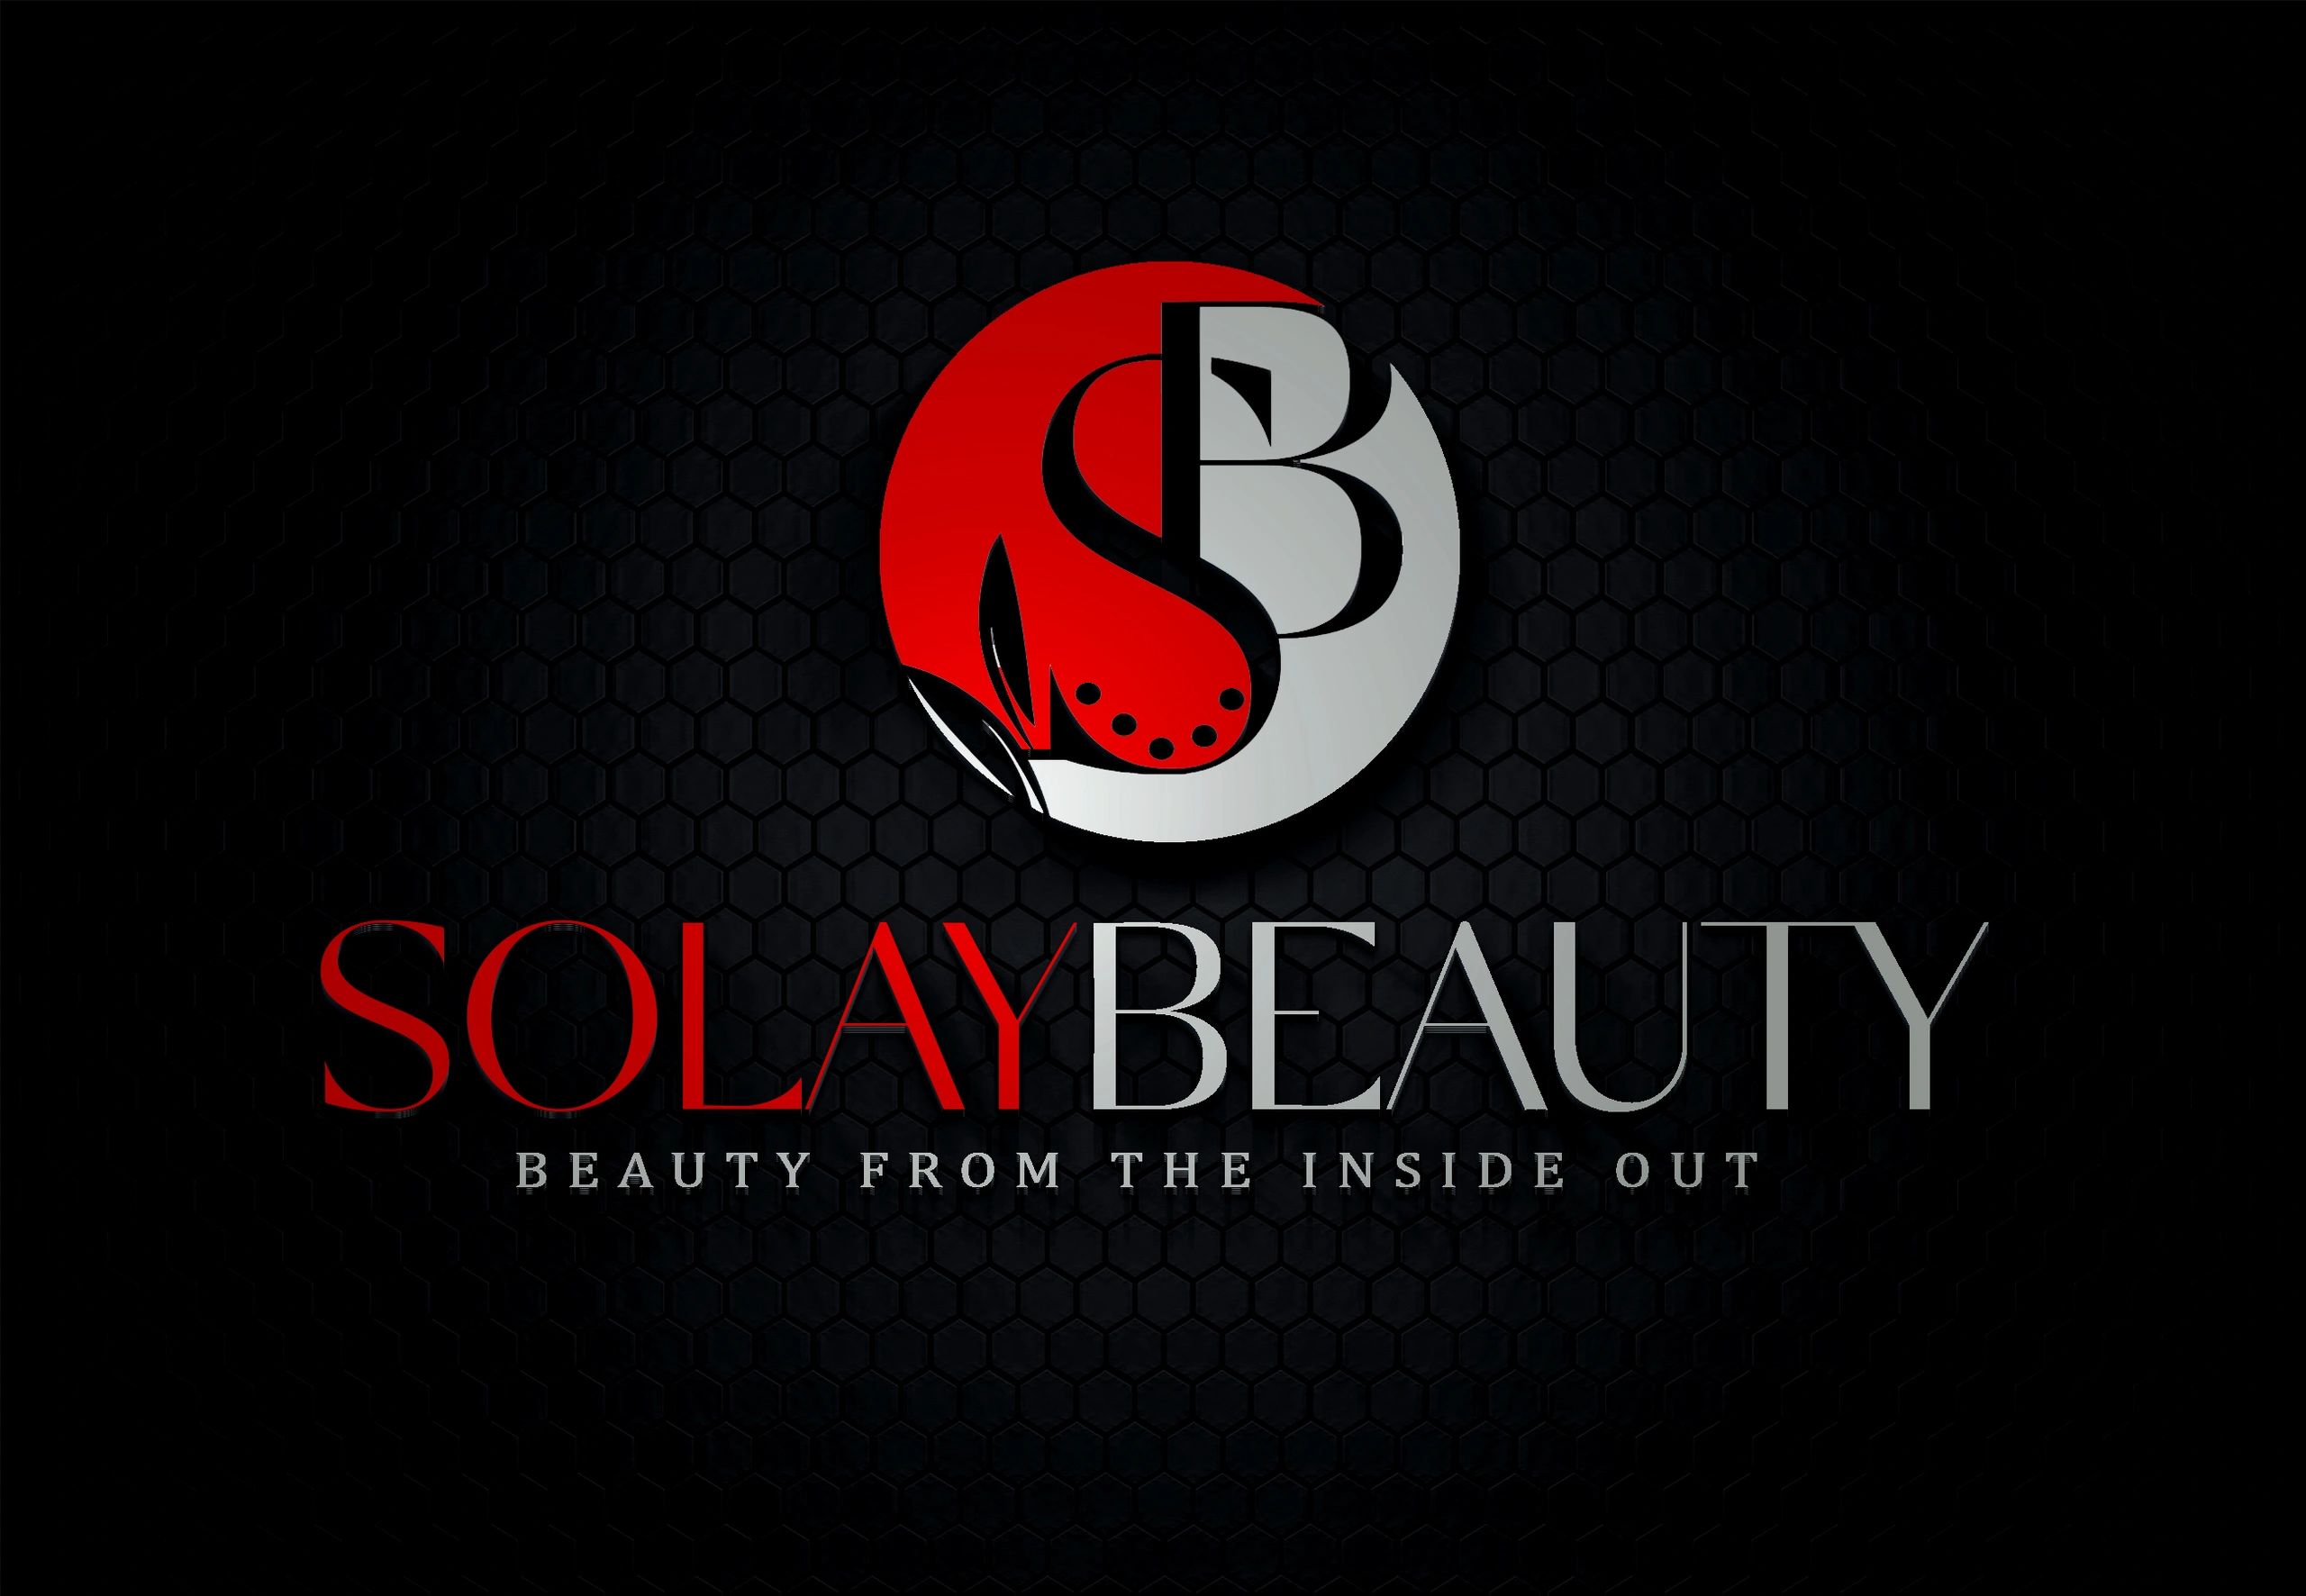 SoLay Beauty LLC